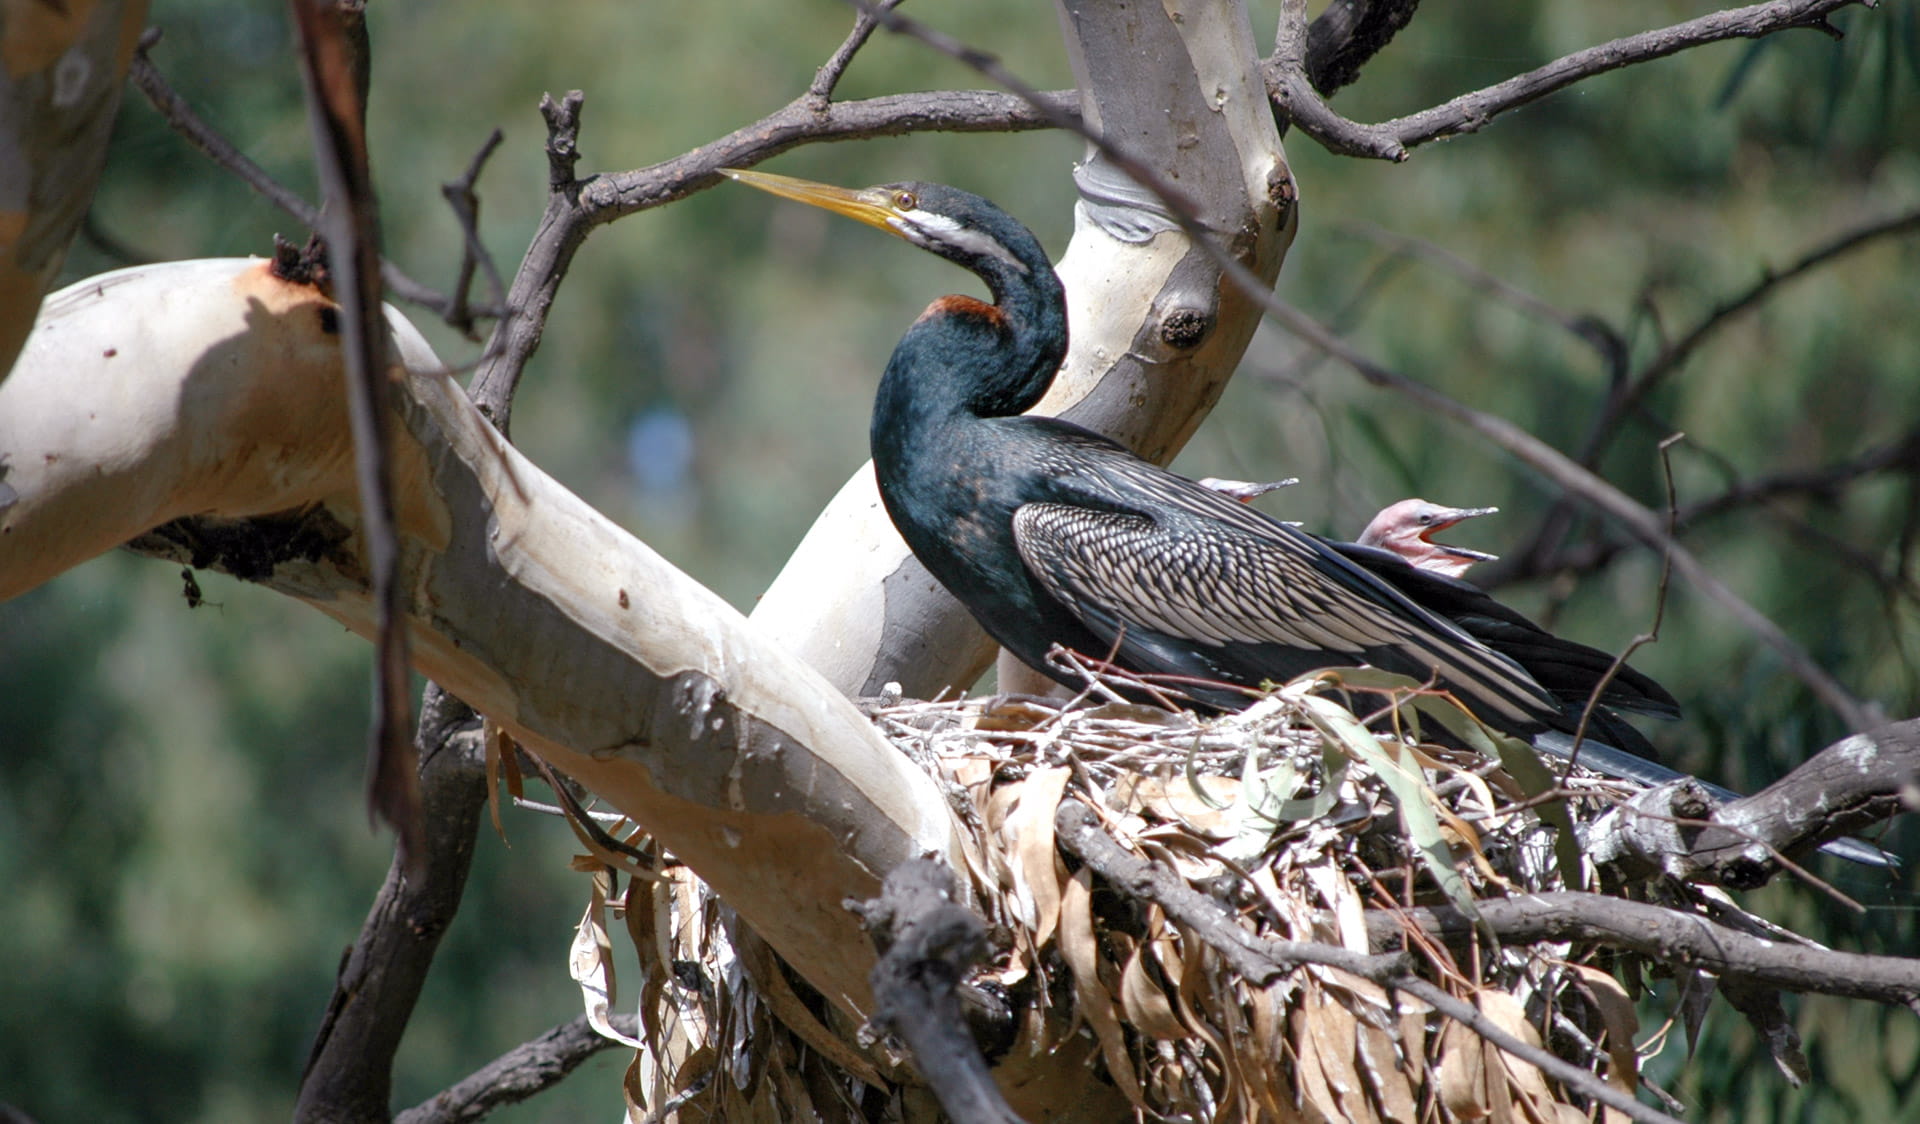 A bird nesting in a tree